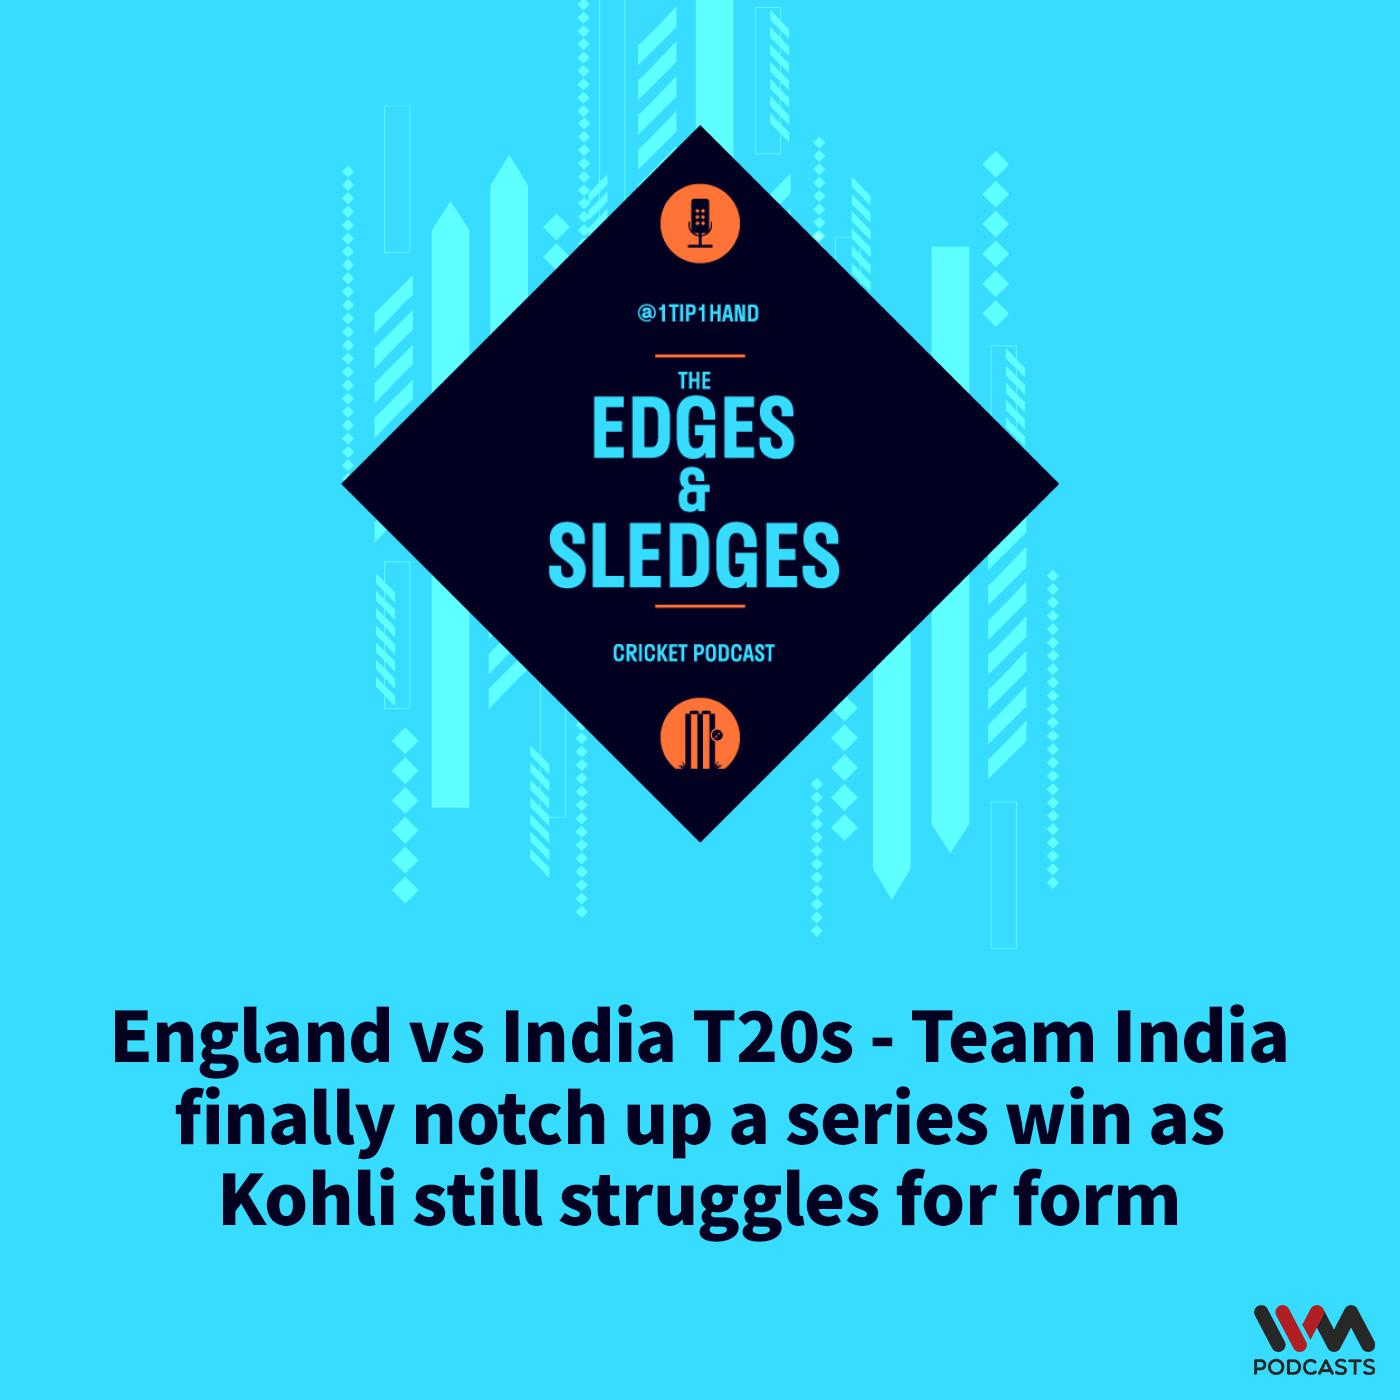 England vs India T20s - Team India finally notch up a series win as Kohli still struggles for form